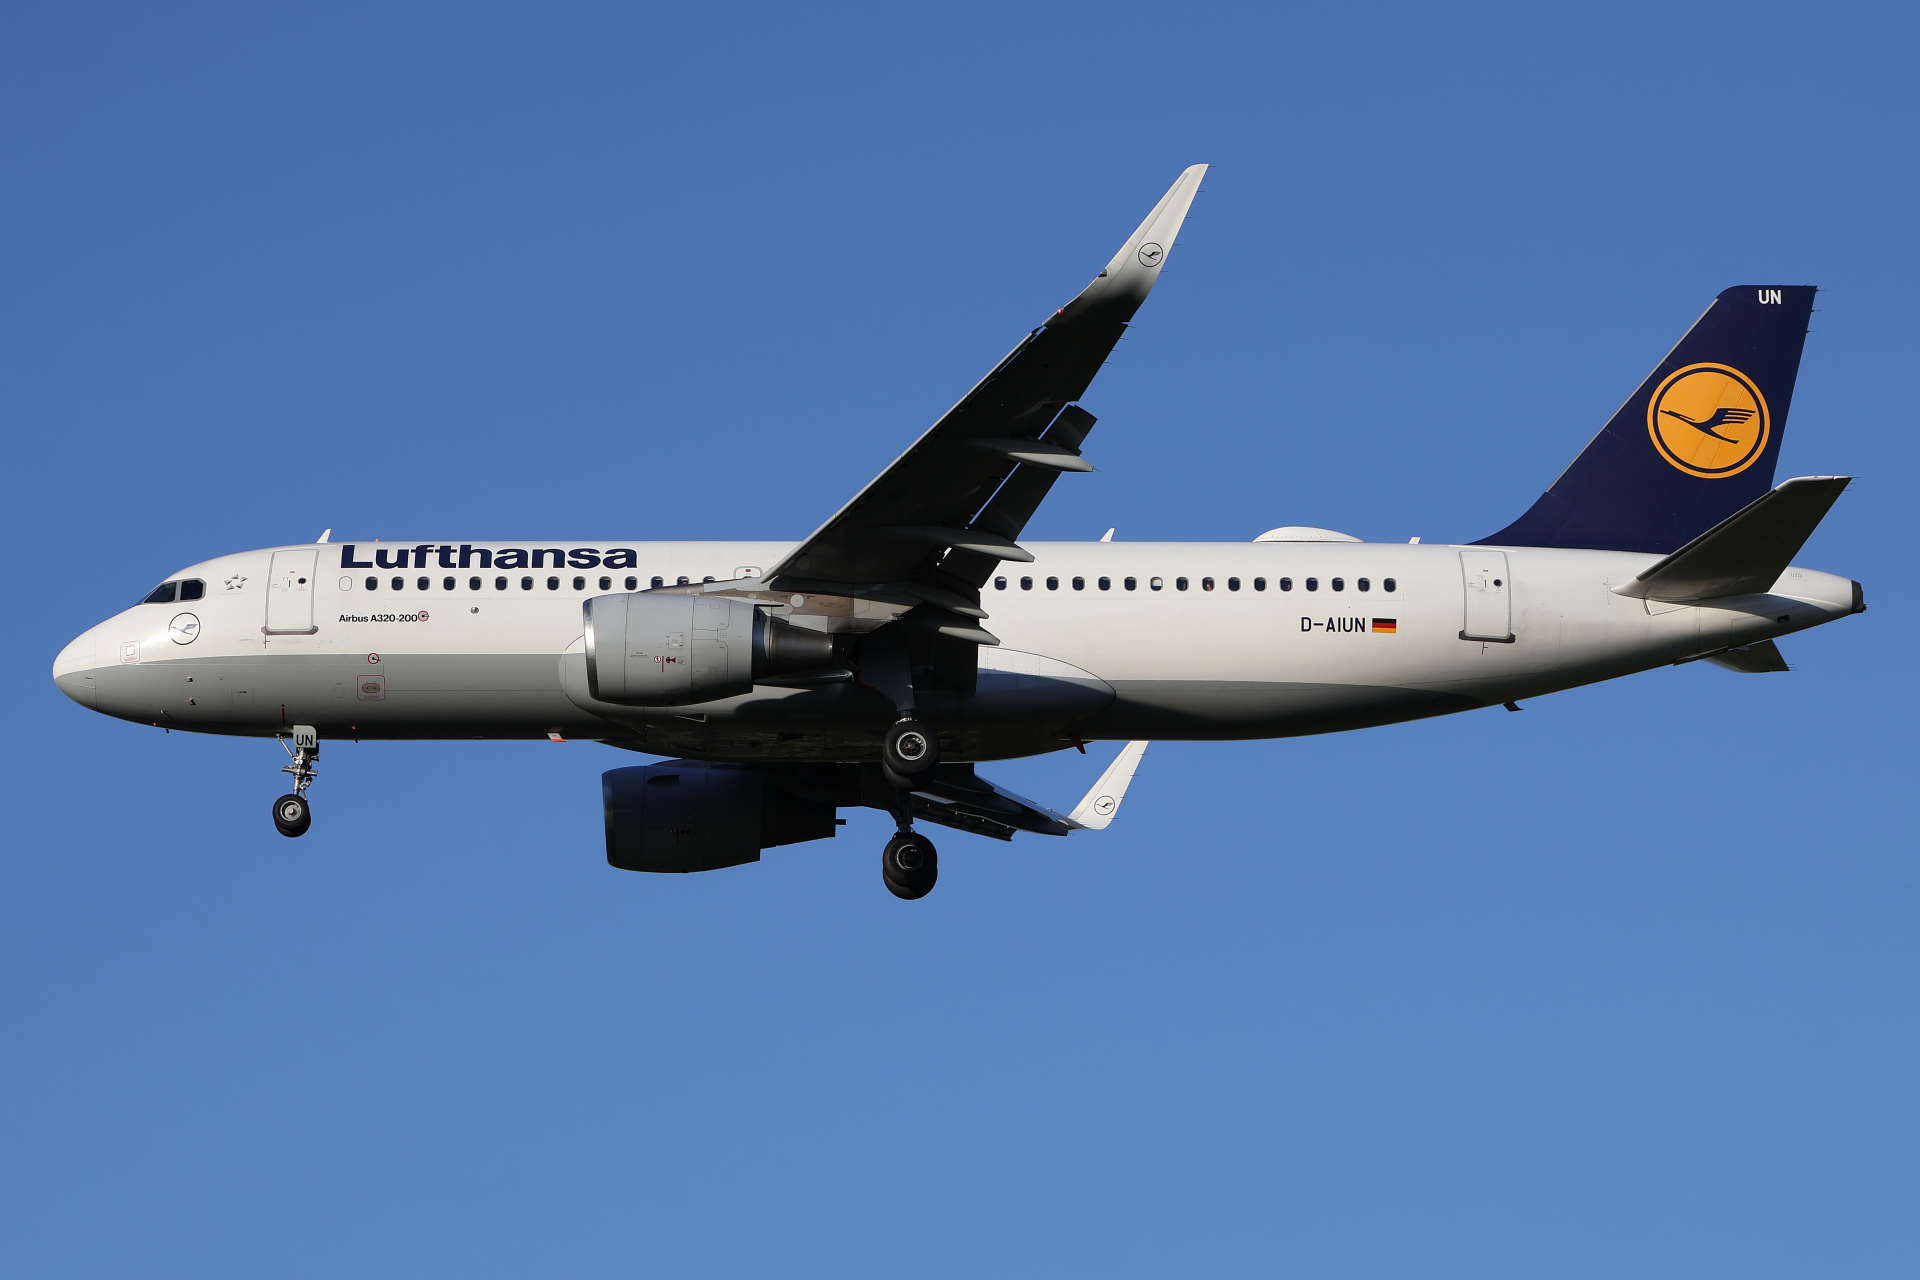 D-AIUN (Aircraft » EPWA Spotting » Airbus A320-200 » Lufthansa)